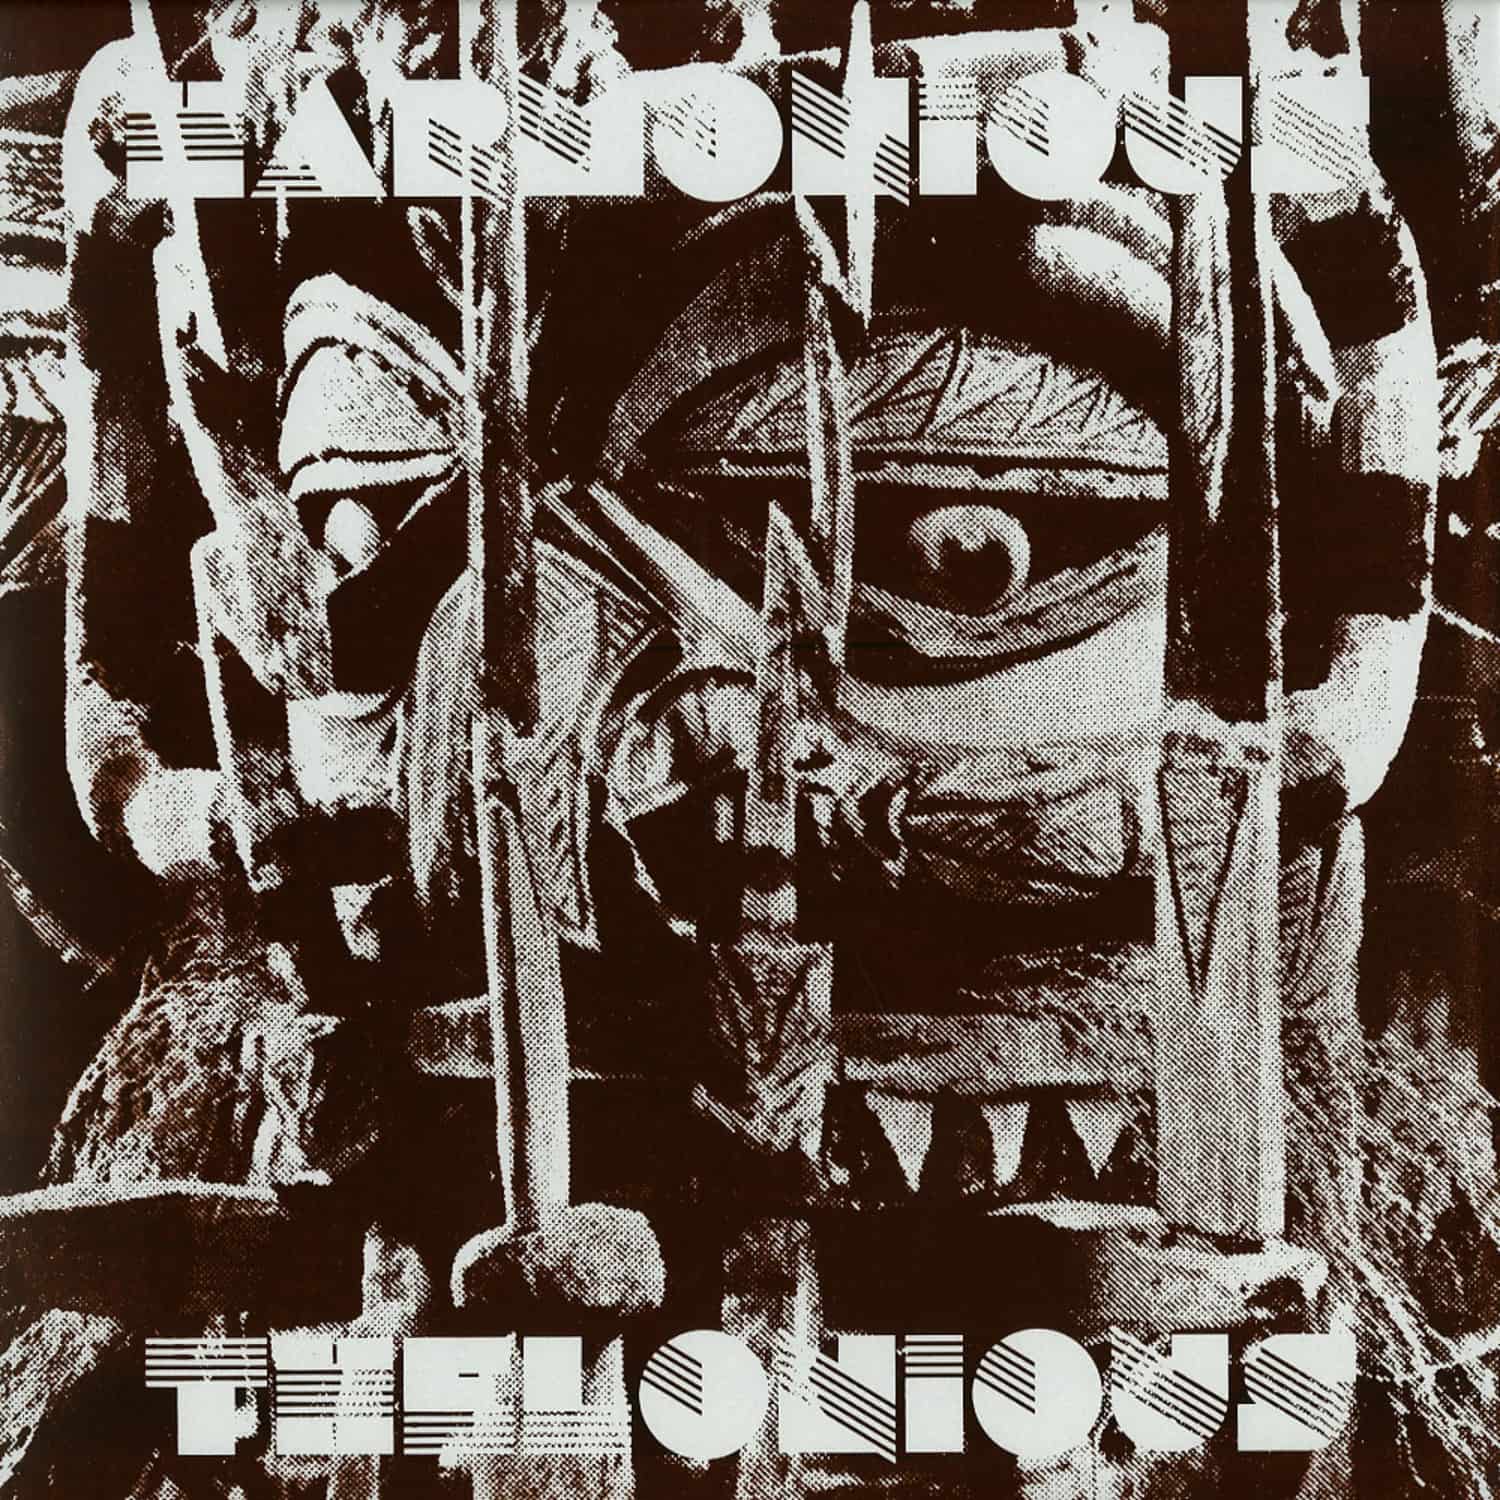 Harmonious Thelonious - DRUMS OF STEEL EP